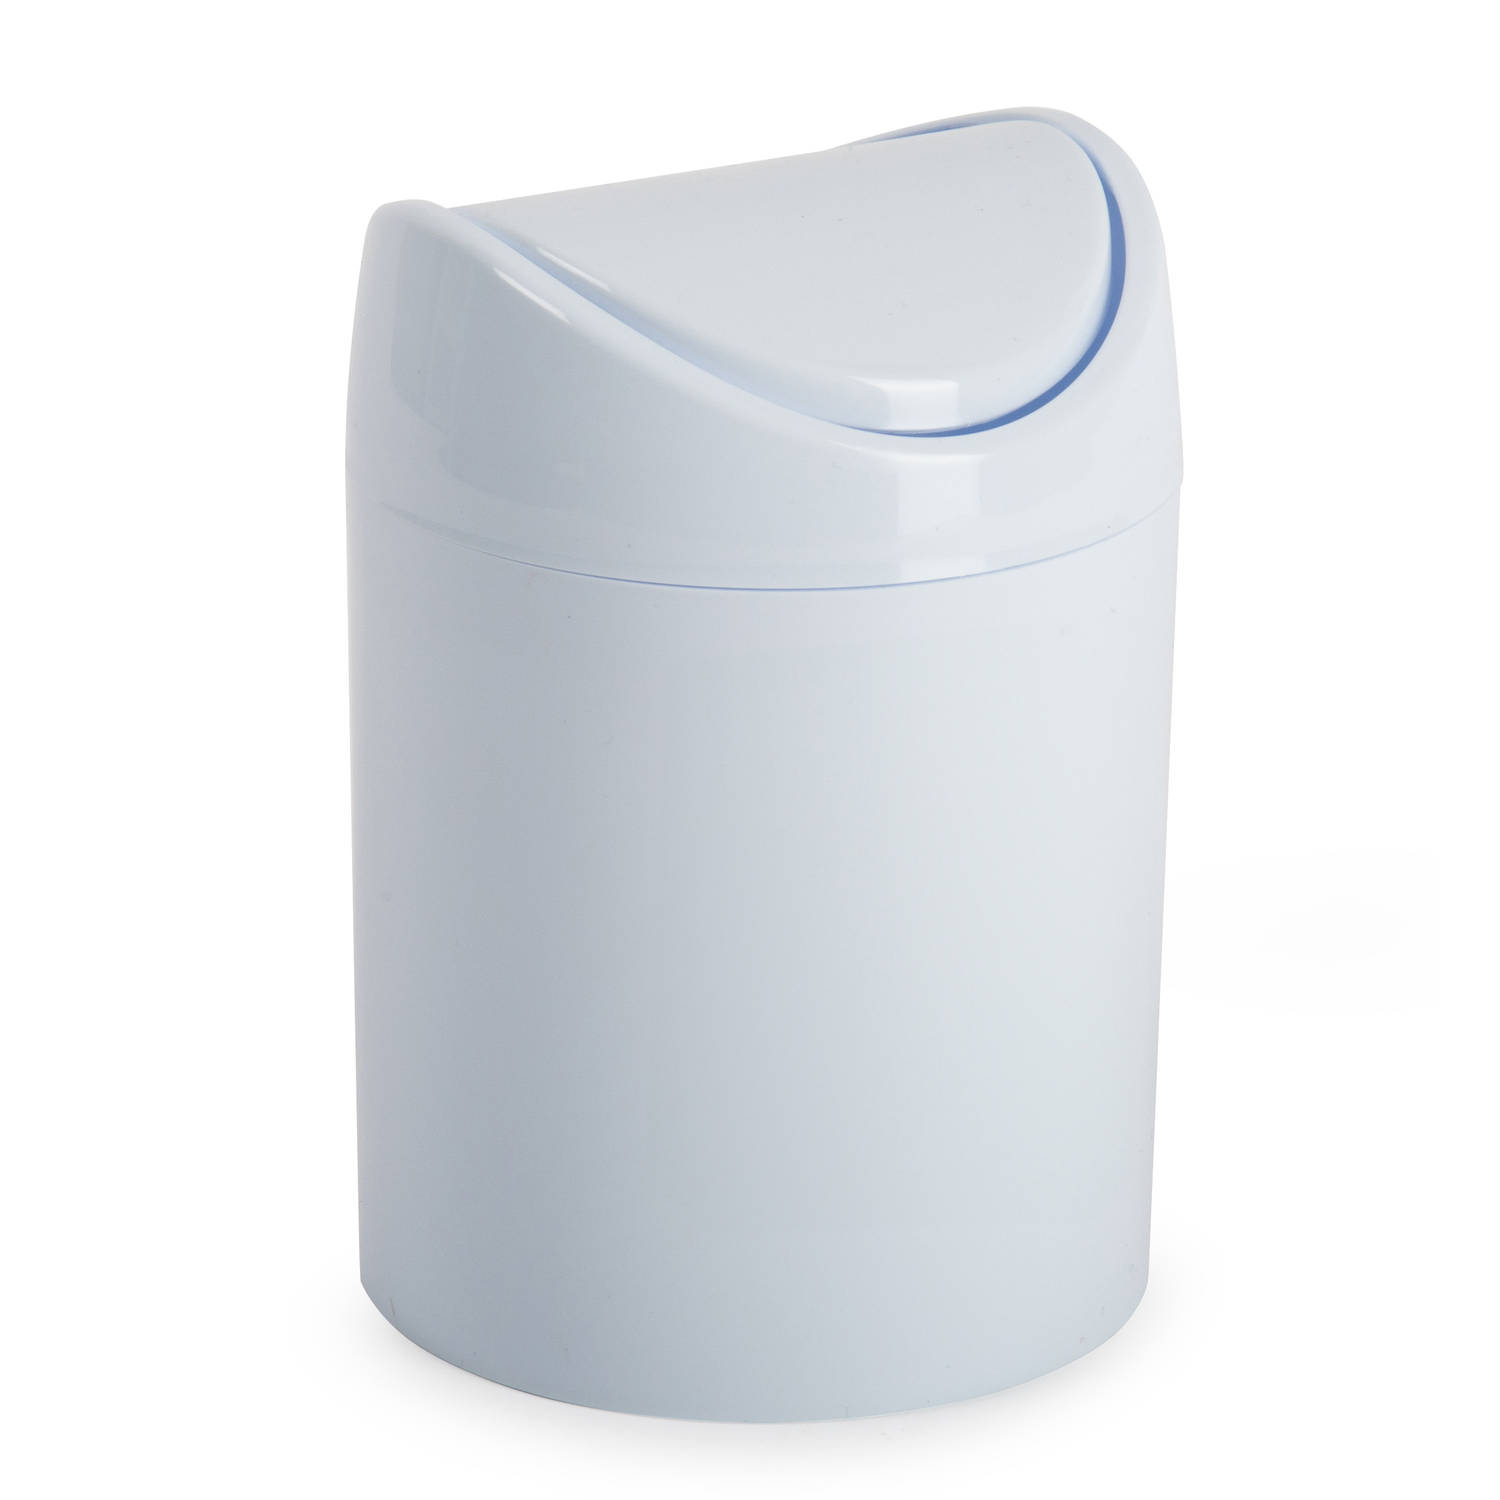 Plasticforte Mini prullenbakje - wit - kunststof - met klepdeksel - keuken aanrecht/tafel model - 1,4 Liter - 12 x 17 cm